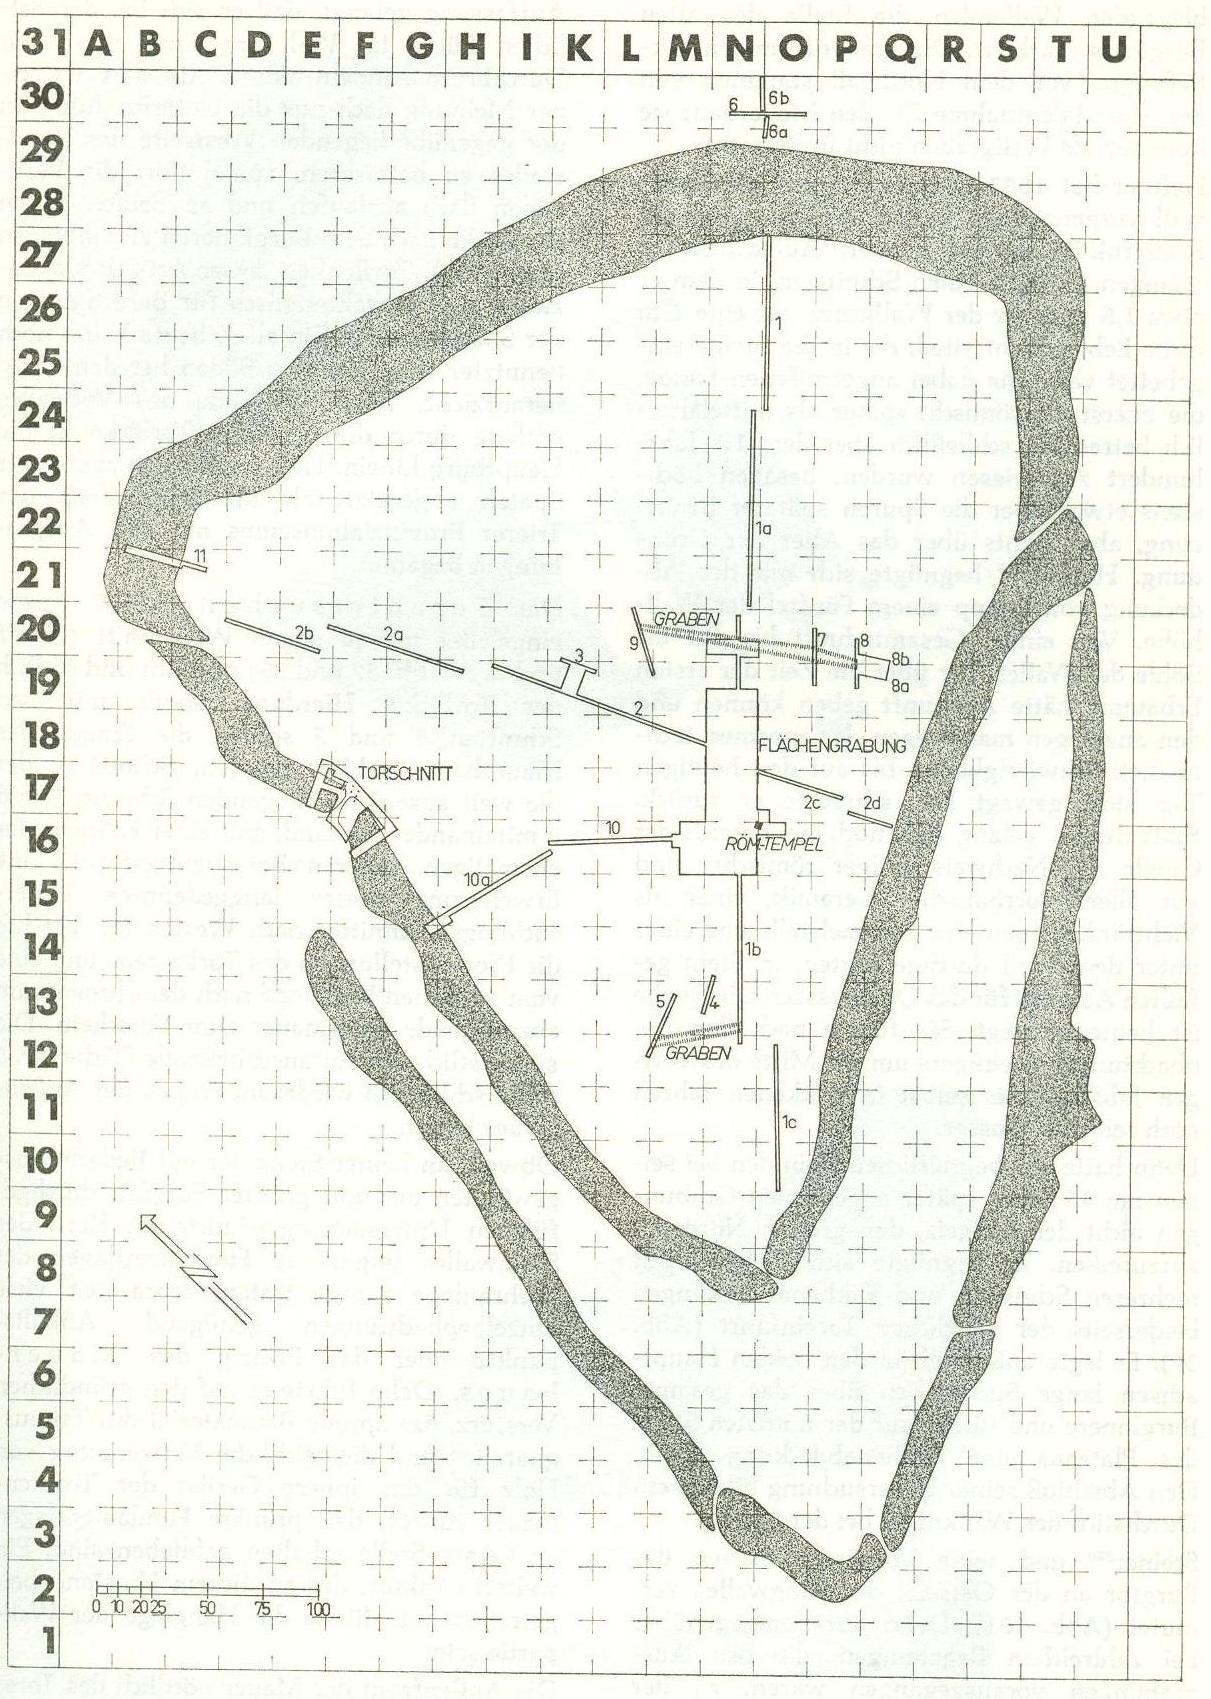 Plan des Hunnenring in Otzenhausen